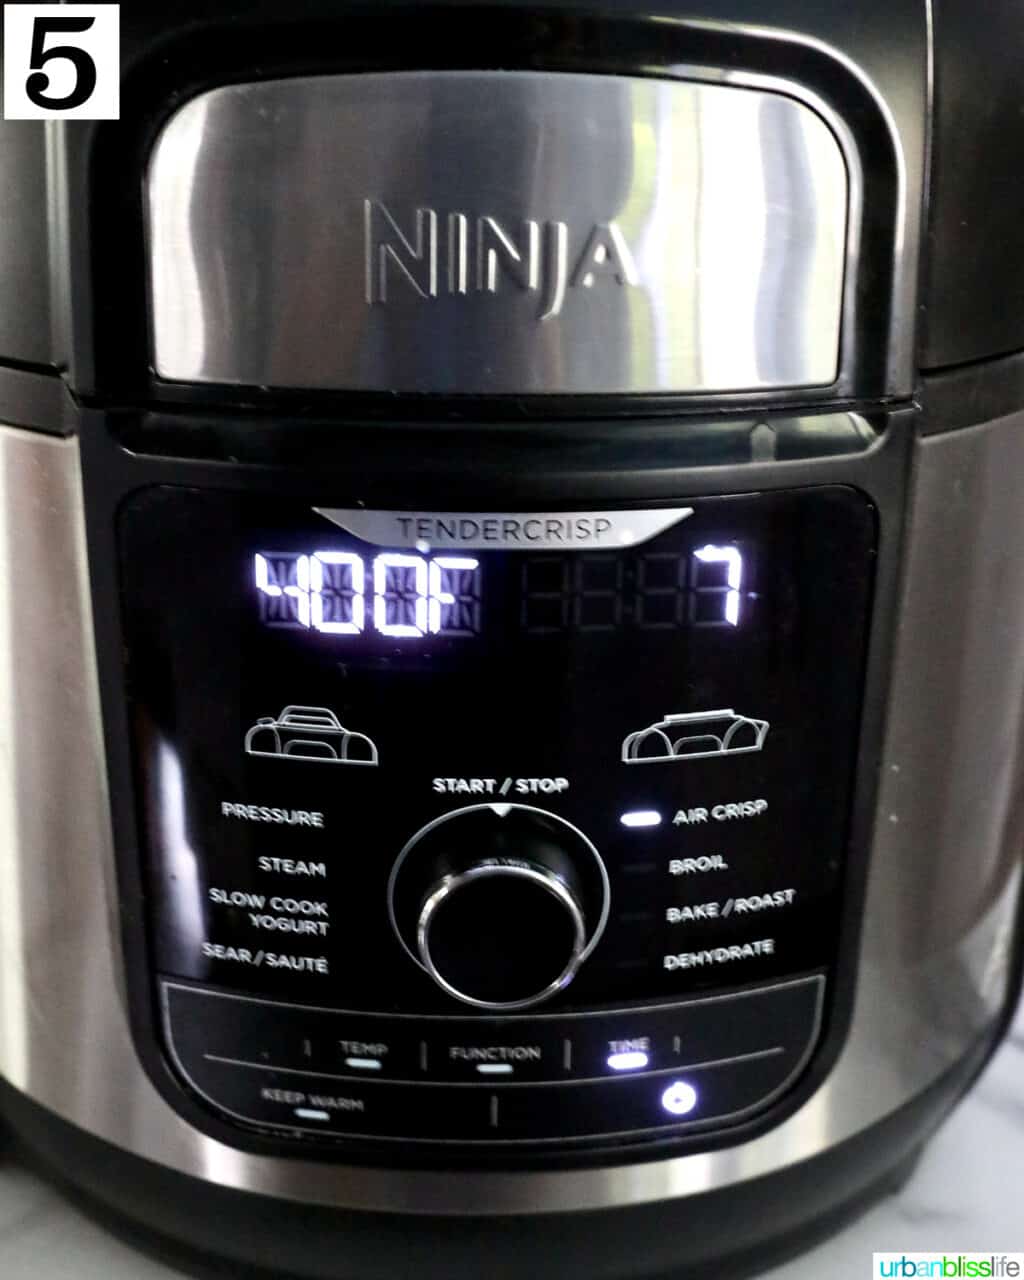 Ninja foodi air fryer at 400°F for 7 minutes.